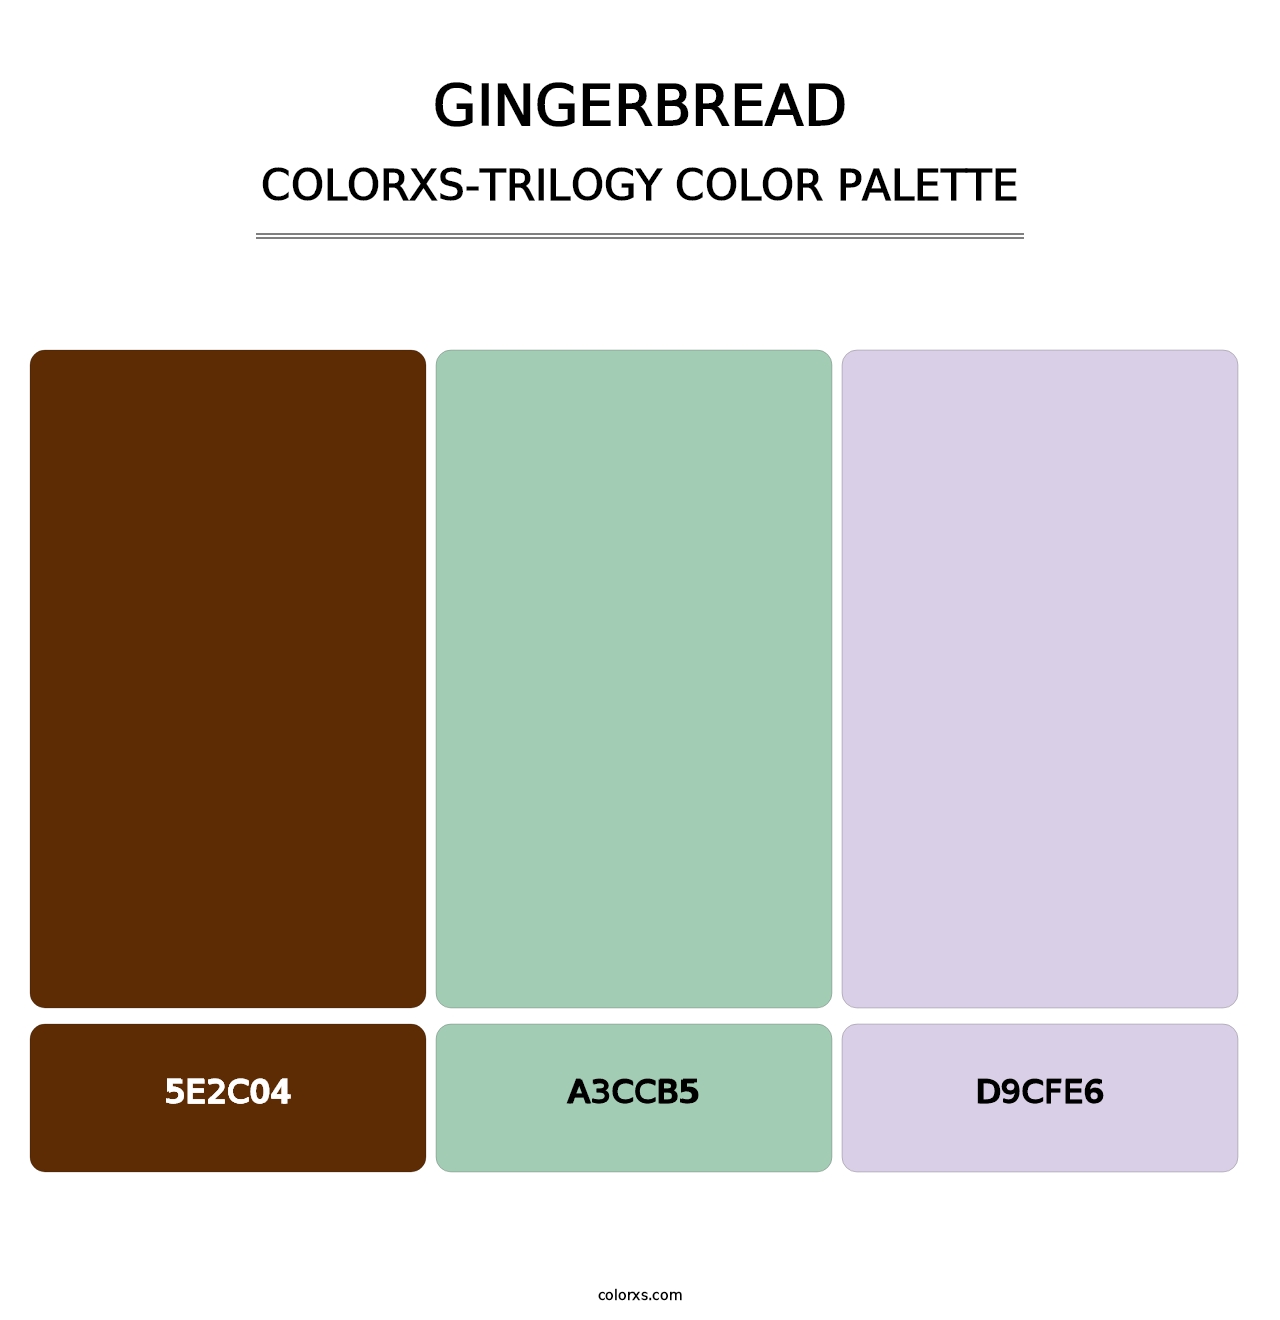 Gingerbread - Colorxs Trilogy Palette